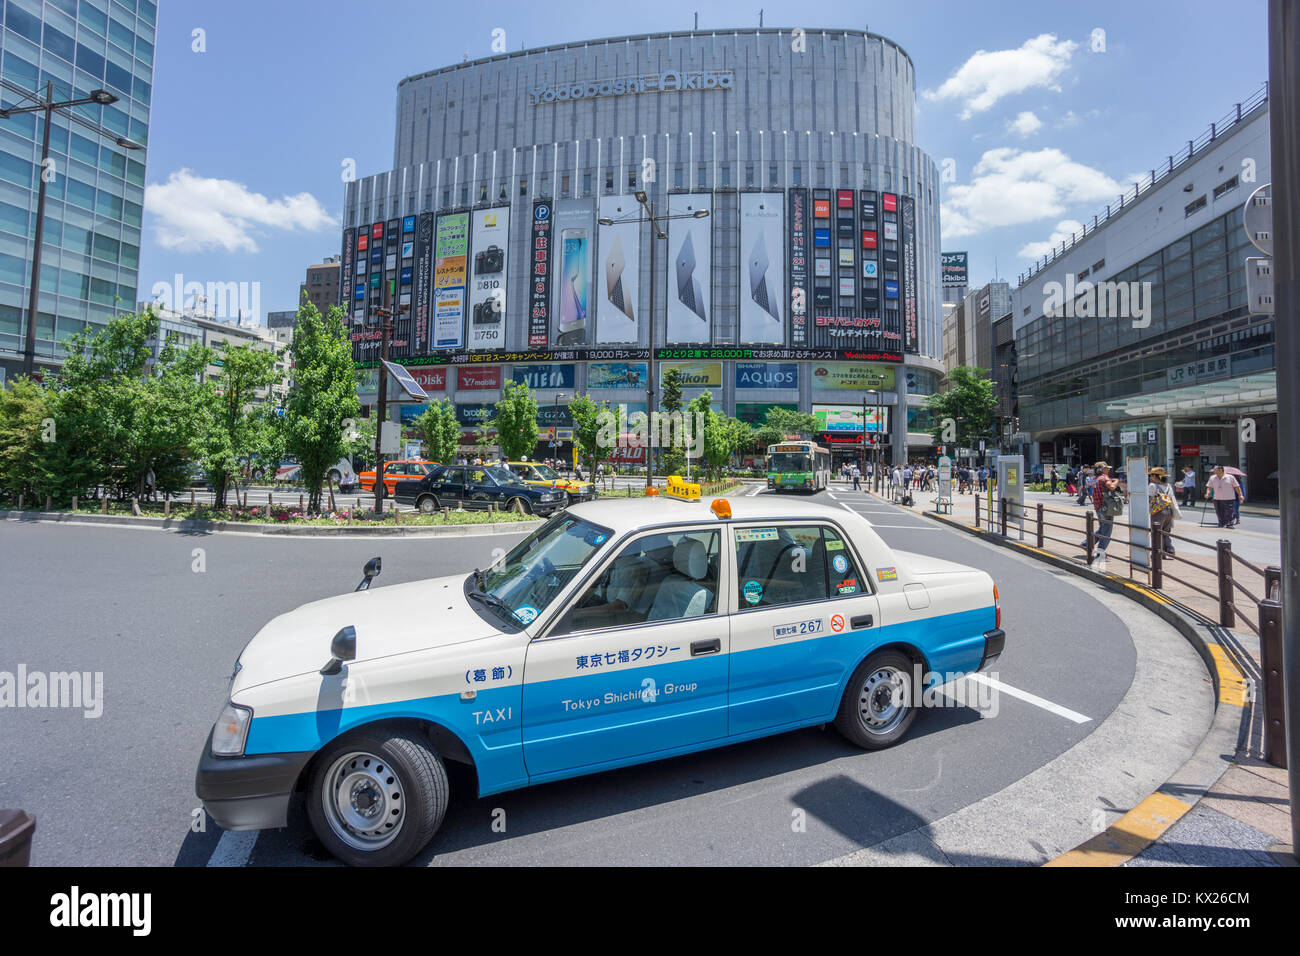 Akihabara taxi vicino a Yodobashi domenica Foto Stock